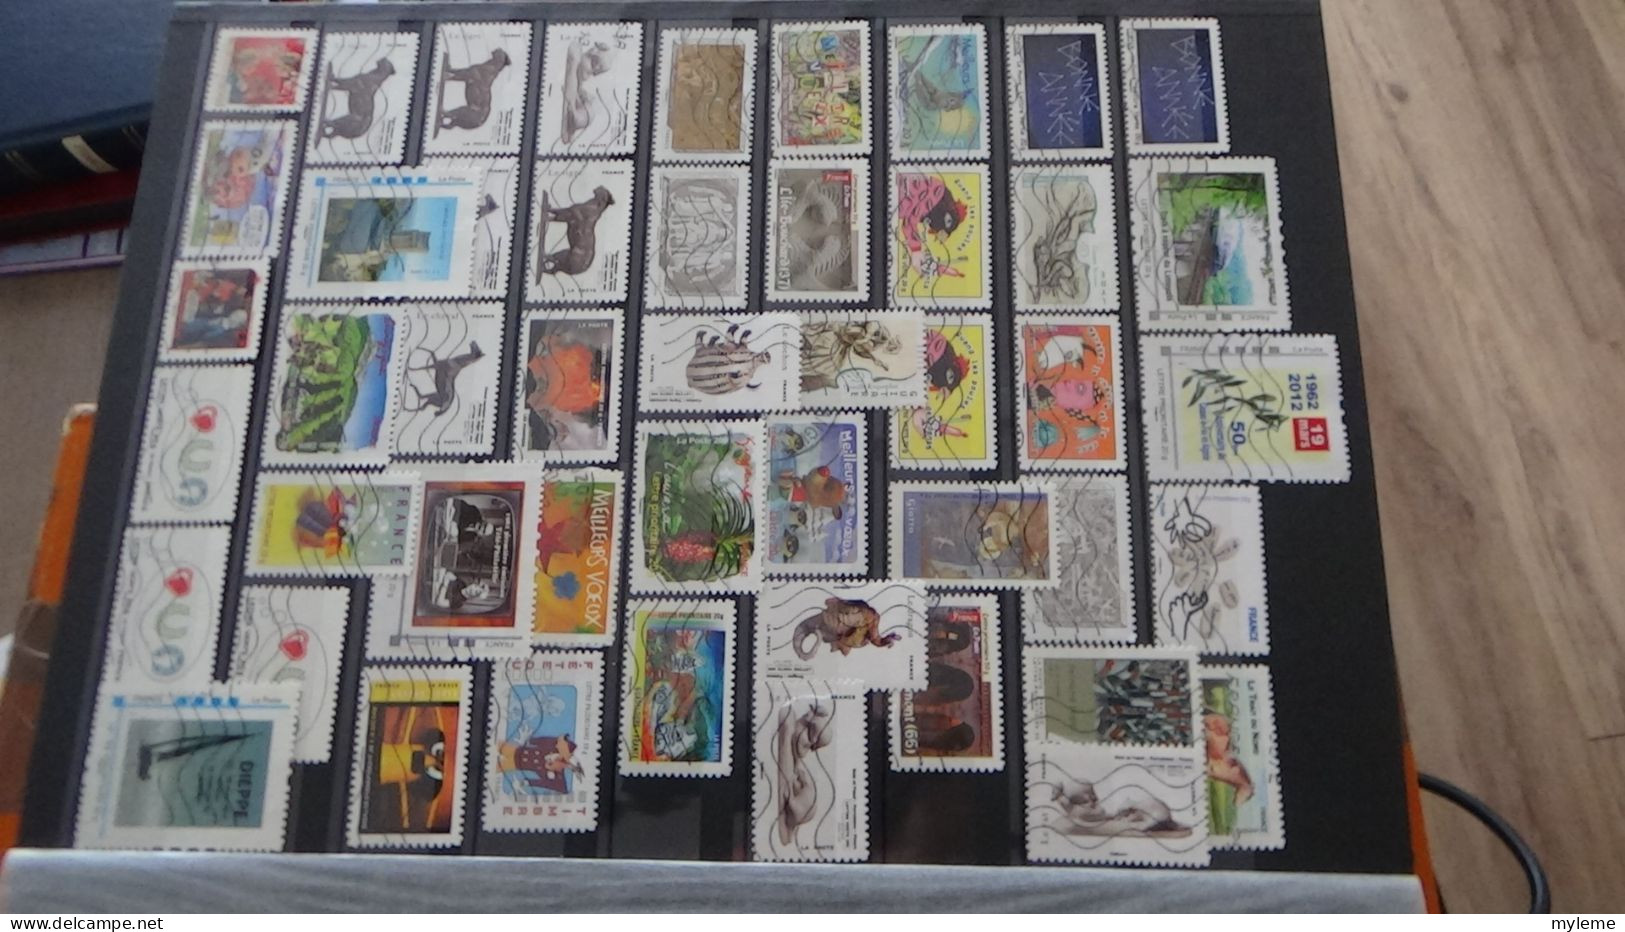 AZ104 Bel ensemble de timbres autoadhésifs oblitérés de France.  A saisir !!!